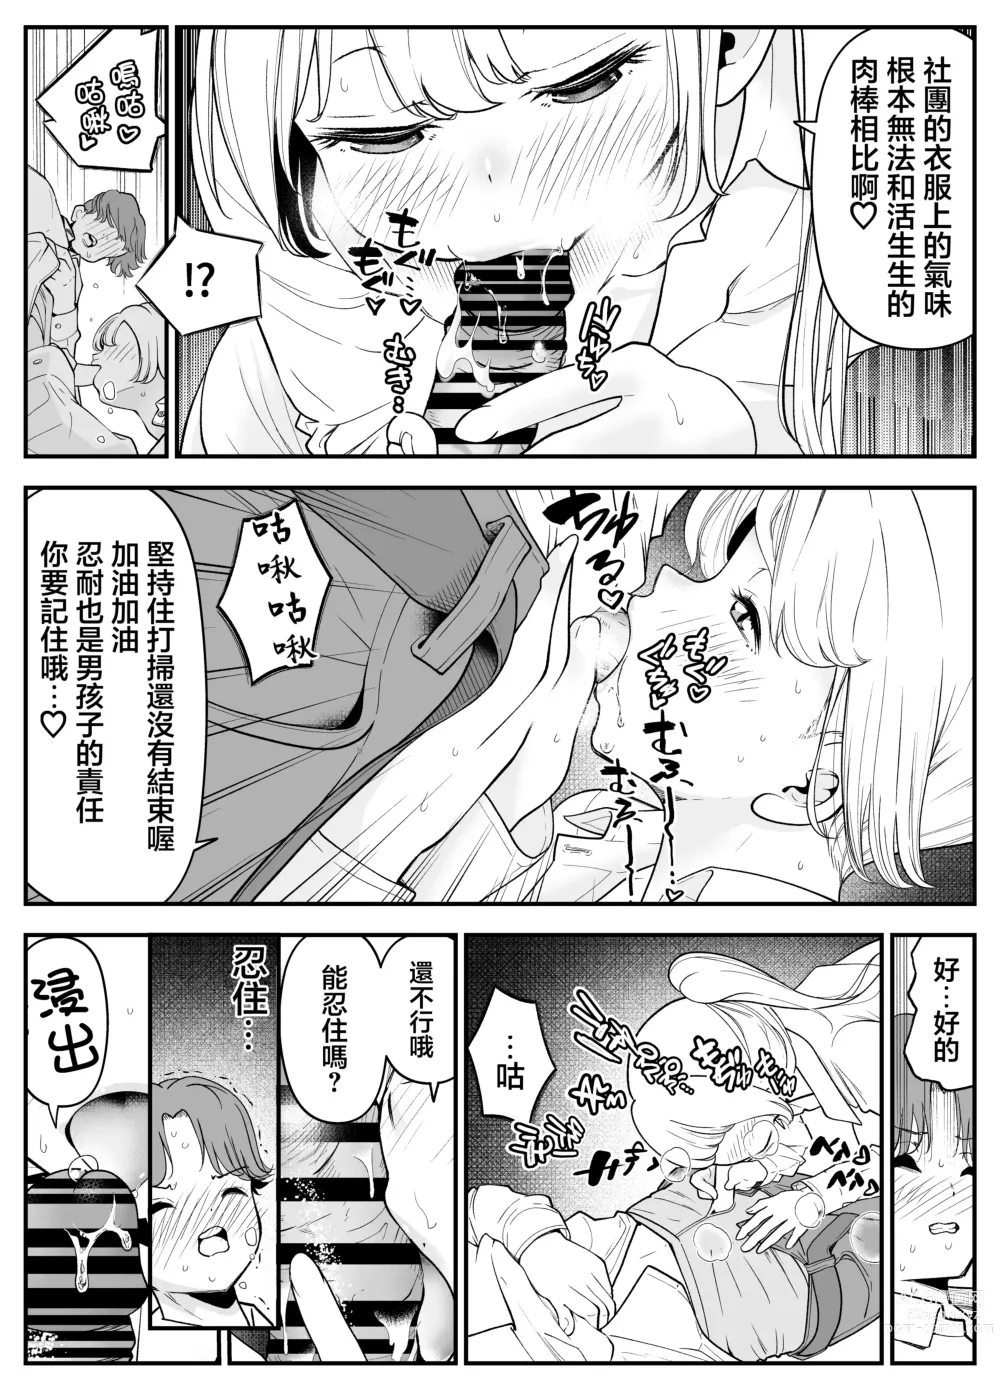 Page 7 of doujinshi 反正結婚之後大家都會SEX要不要和同學一起練習一下?